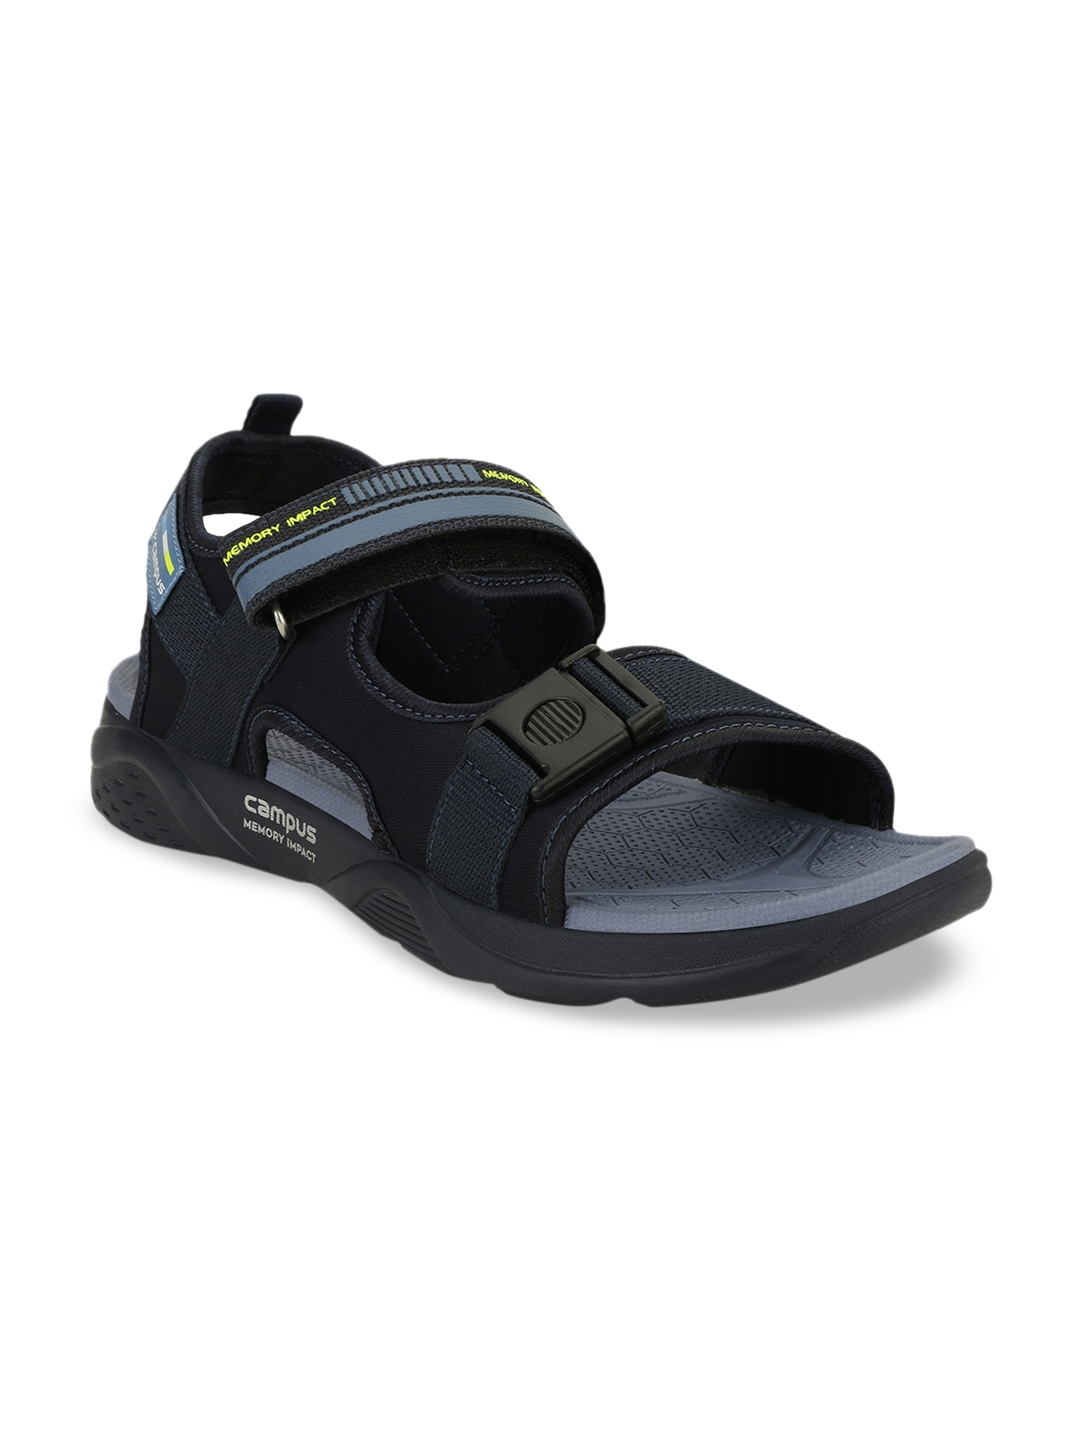 Buy Campus Men Navy Blue Sports Sandals Sports Sandals